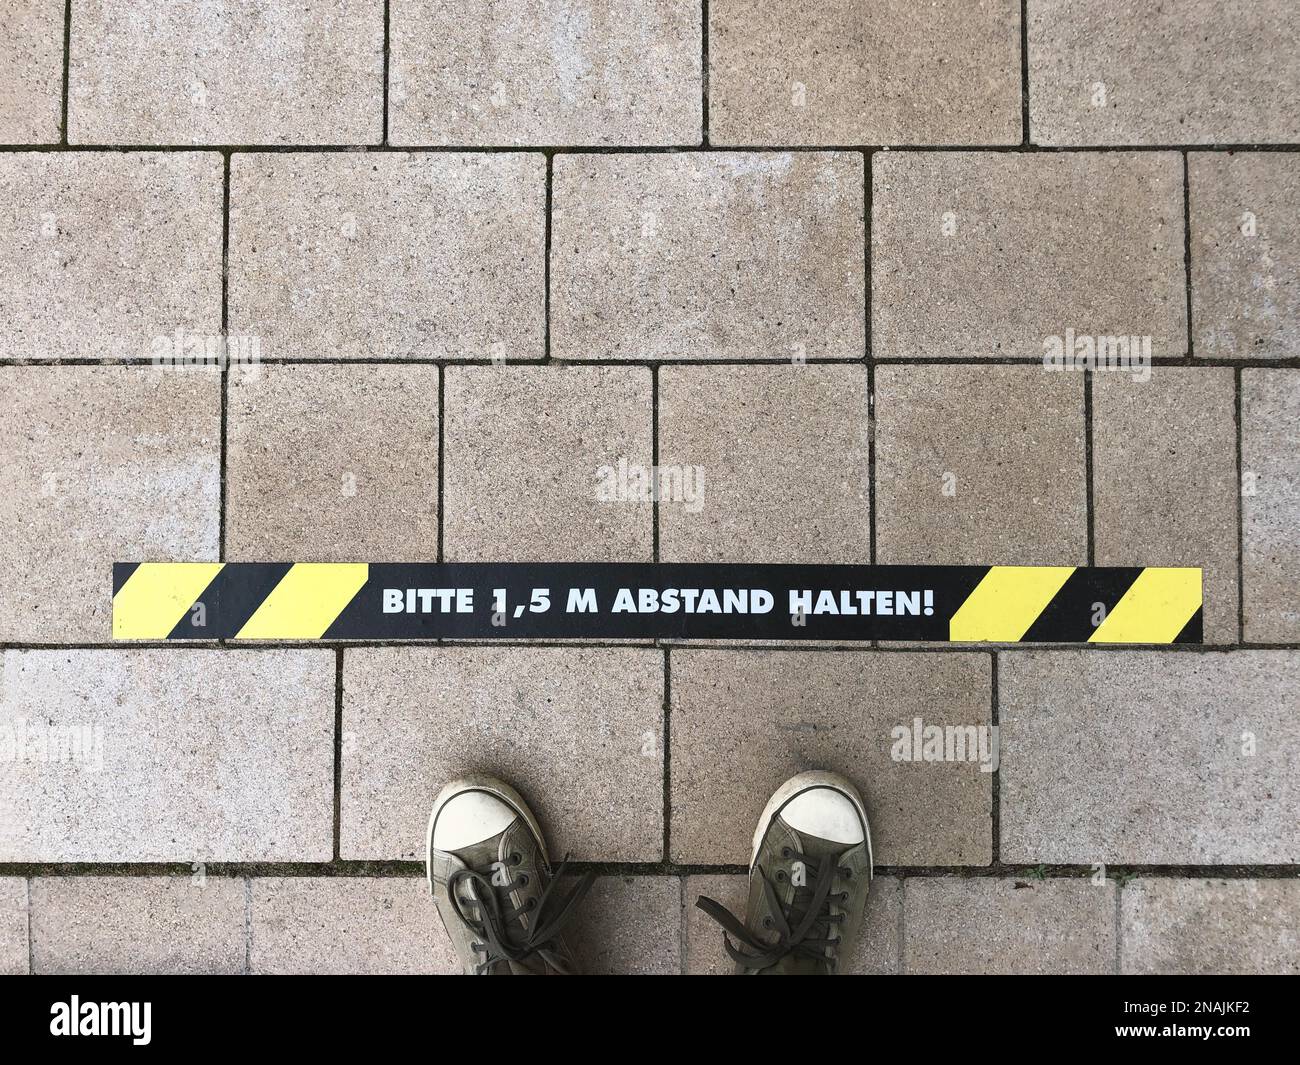 Bitte 1, 5 m Abstand halten - German for Please keep 1.5 m distance - line marking on sidewalk - social distancing in Germany Stock Photo